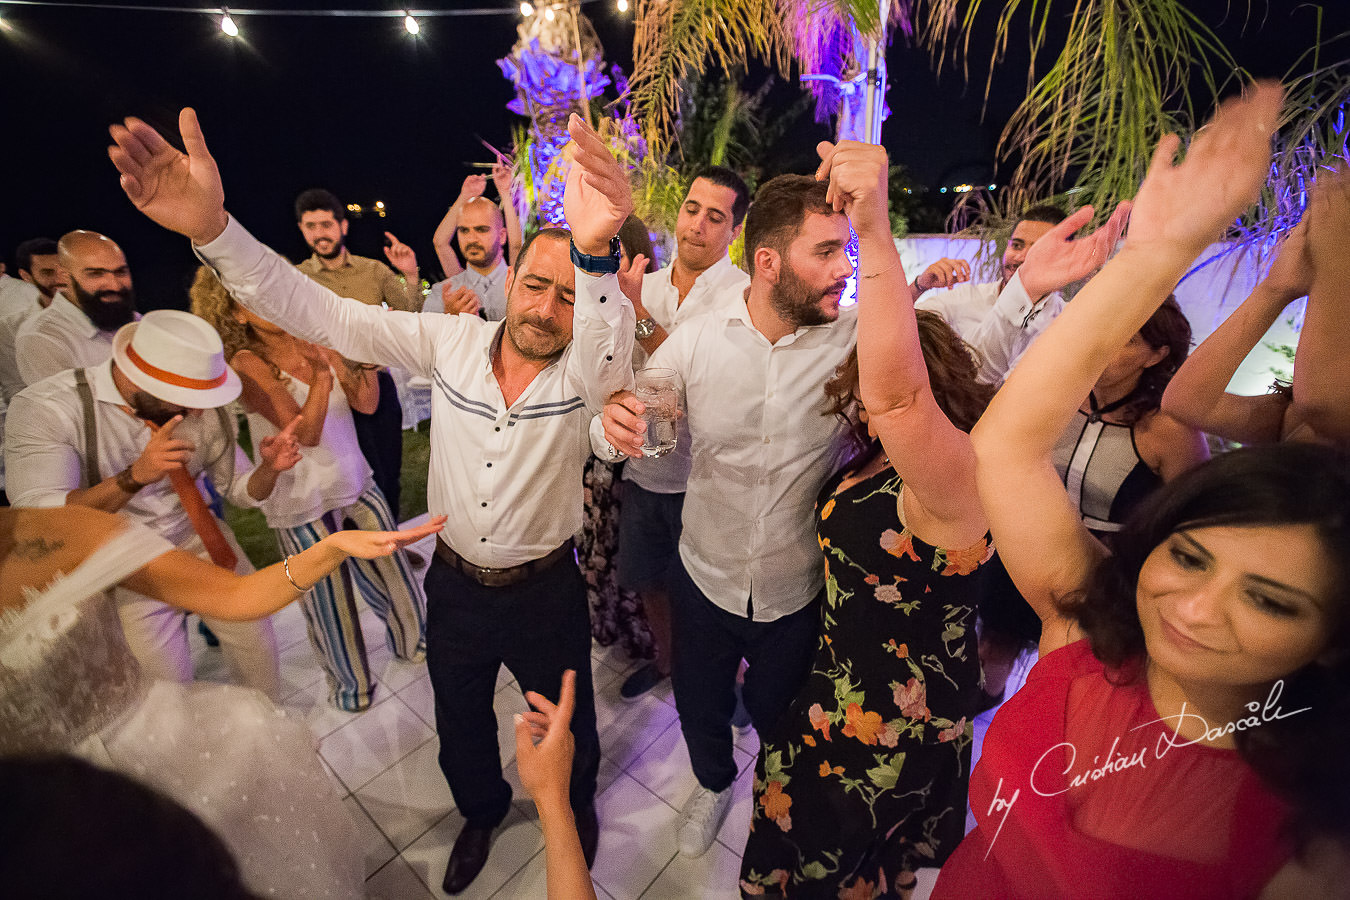 Wedding Photography at Lebay Hotel in Larnaca by Cyprus Wedding Photographer Cristian Dascalu.